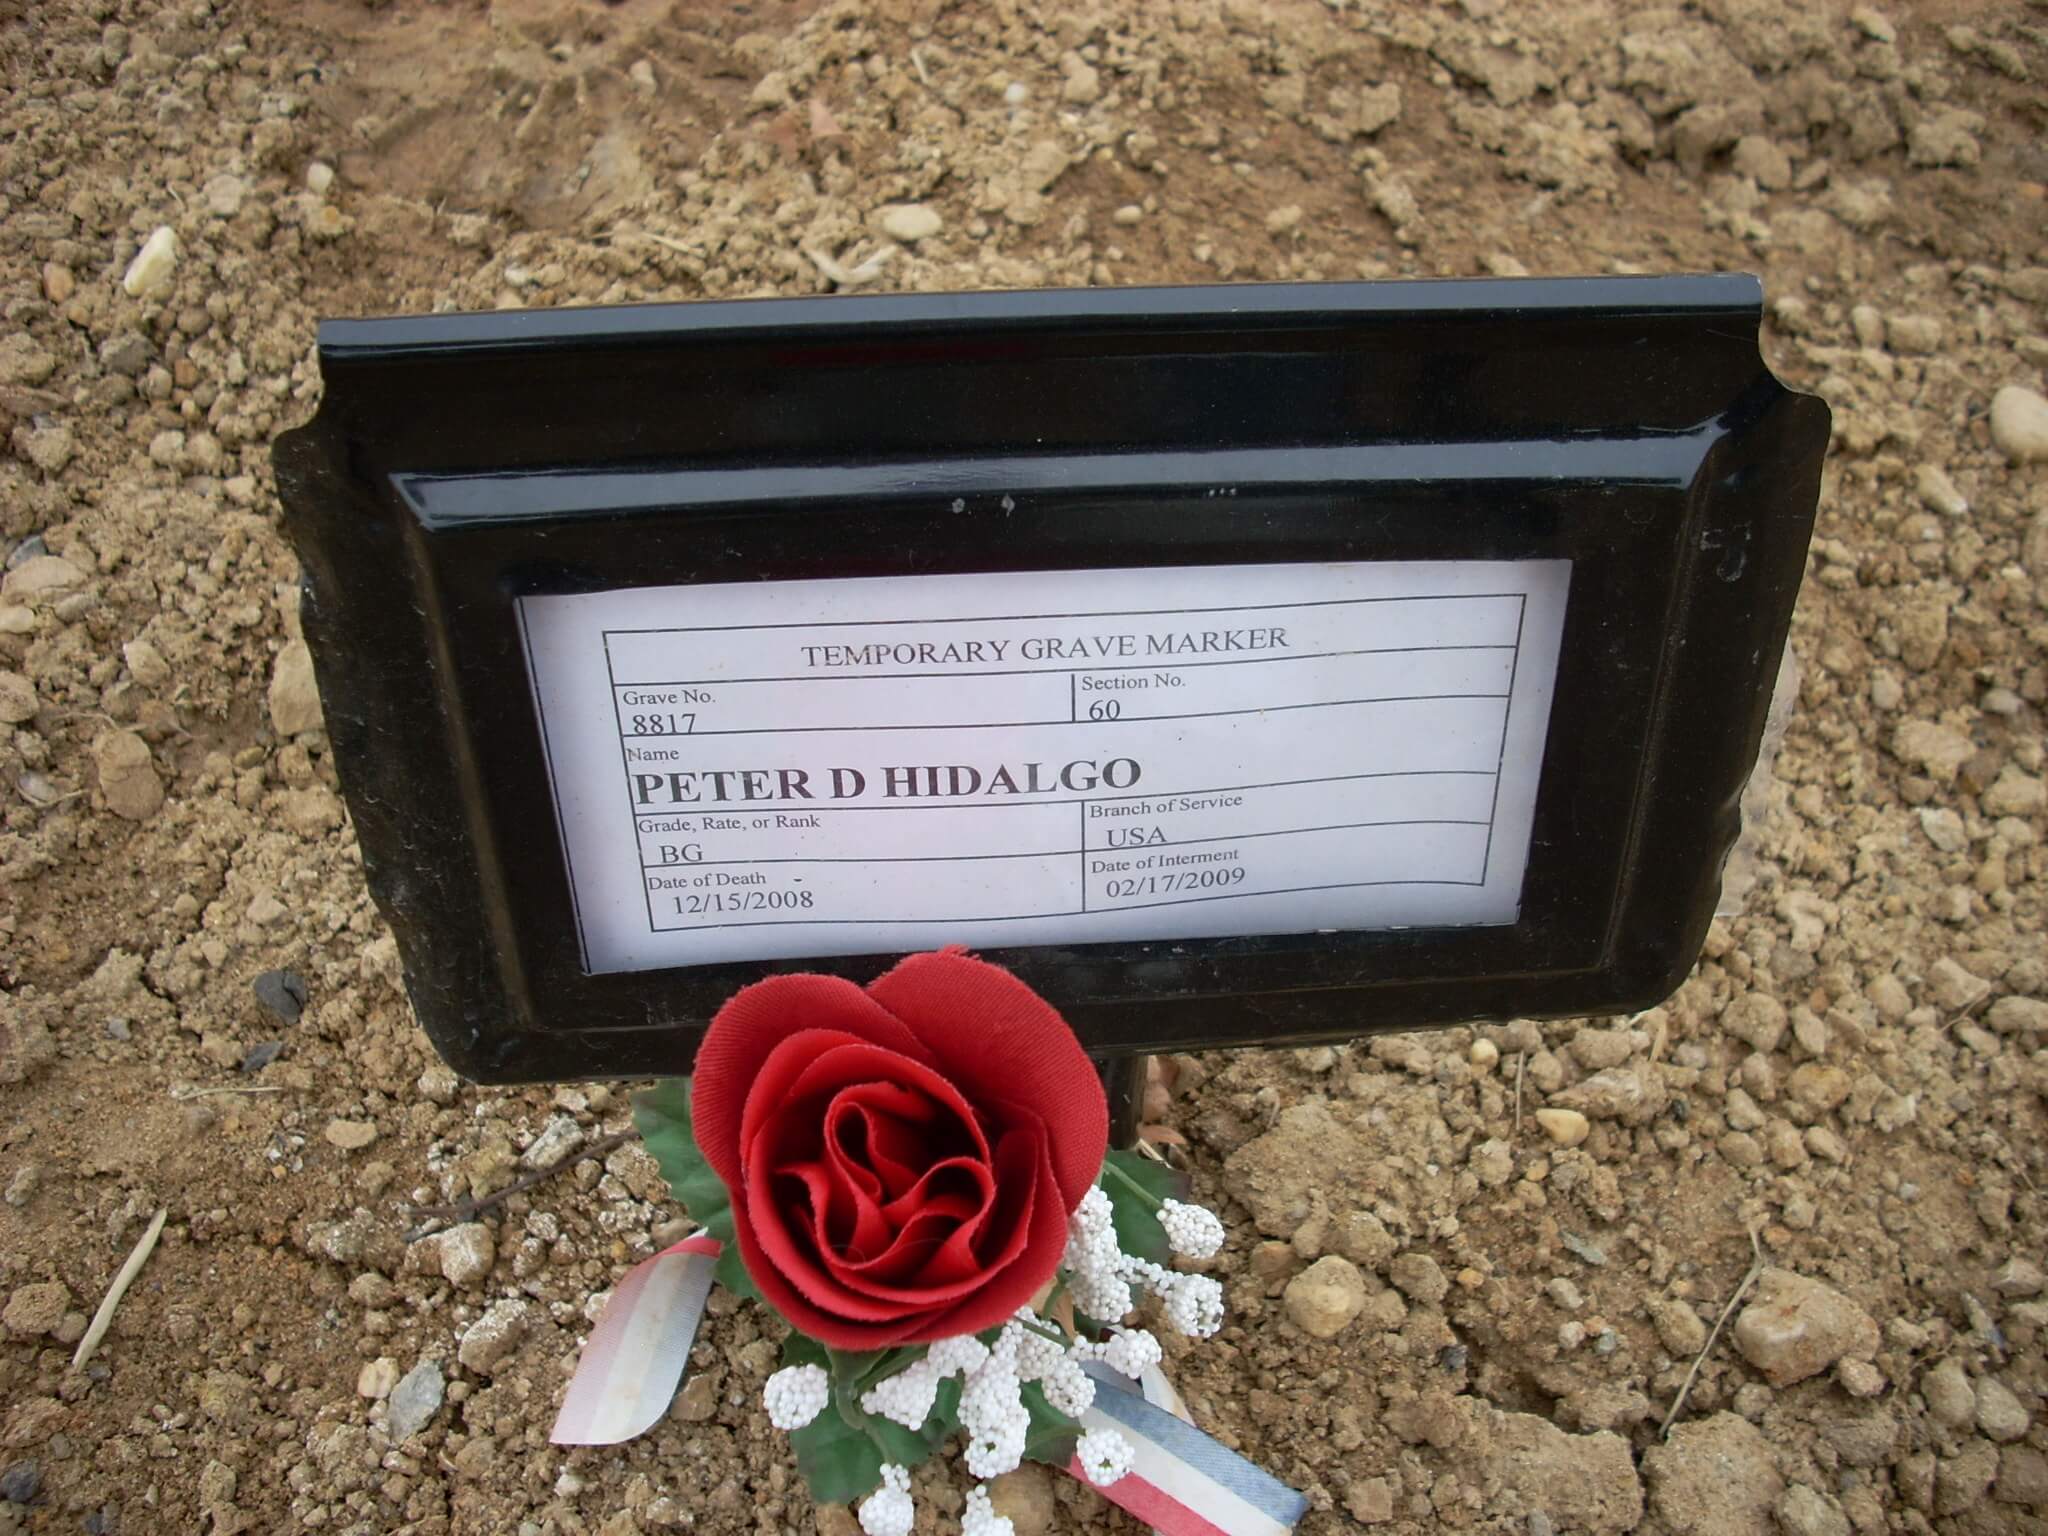 pdhidalgo-gravesite-photo-february-2009-001